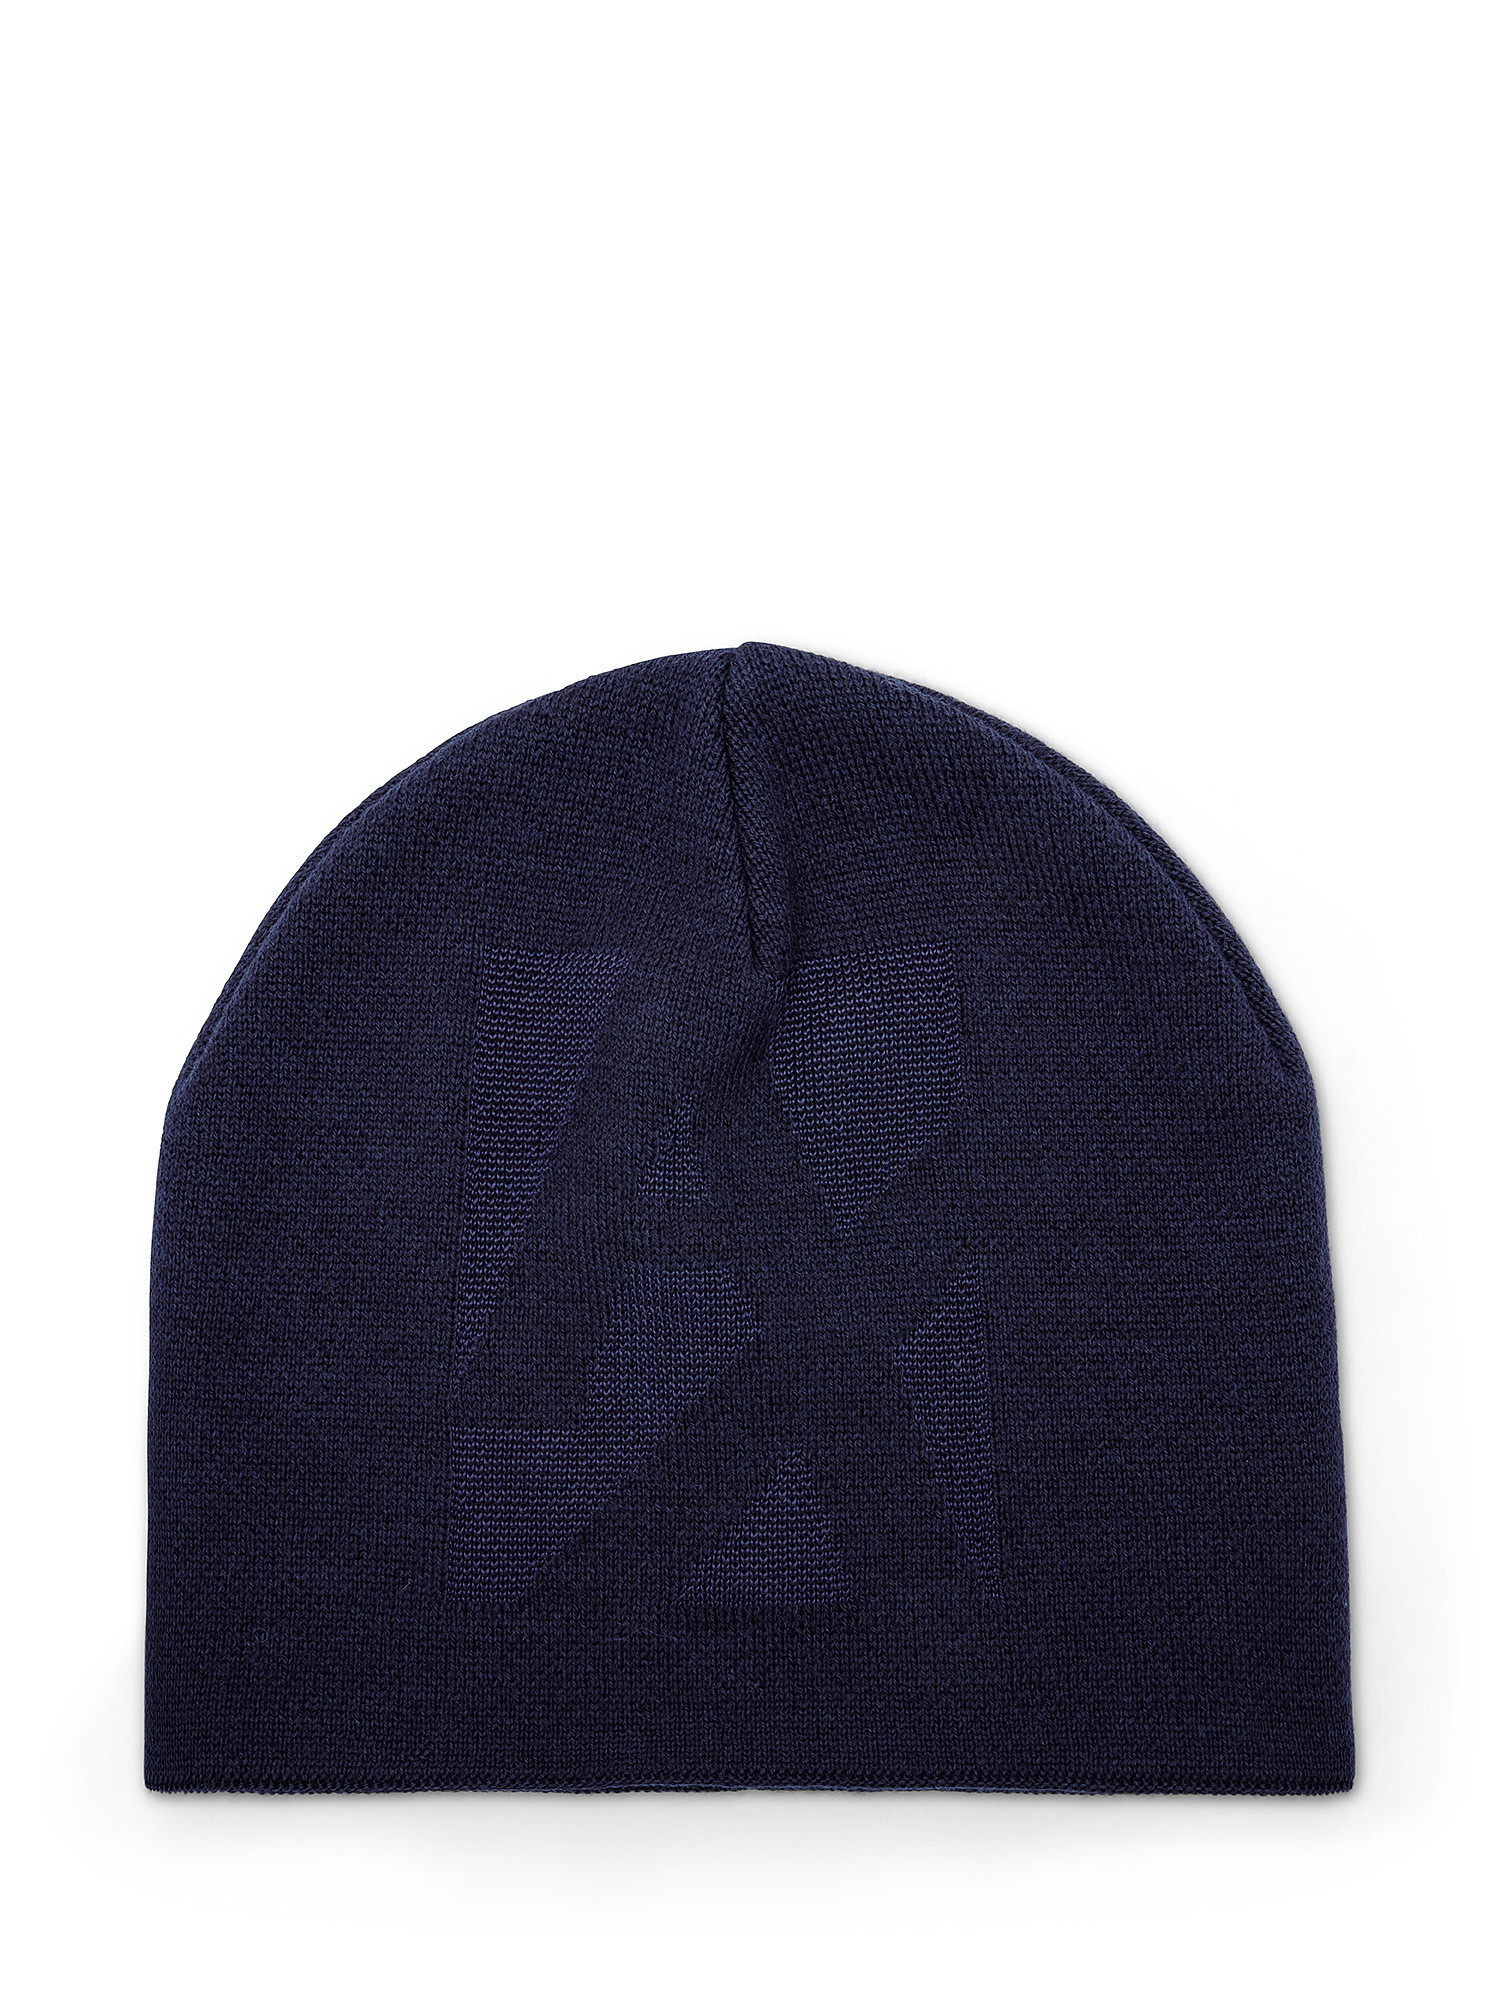 Armani Exchange - Wool blend beanie hat with logo, Dark Blue, large image number 0